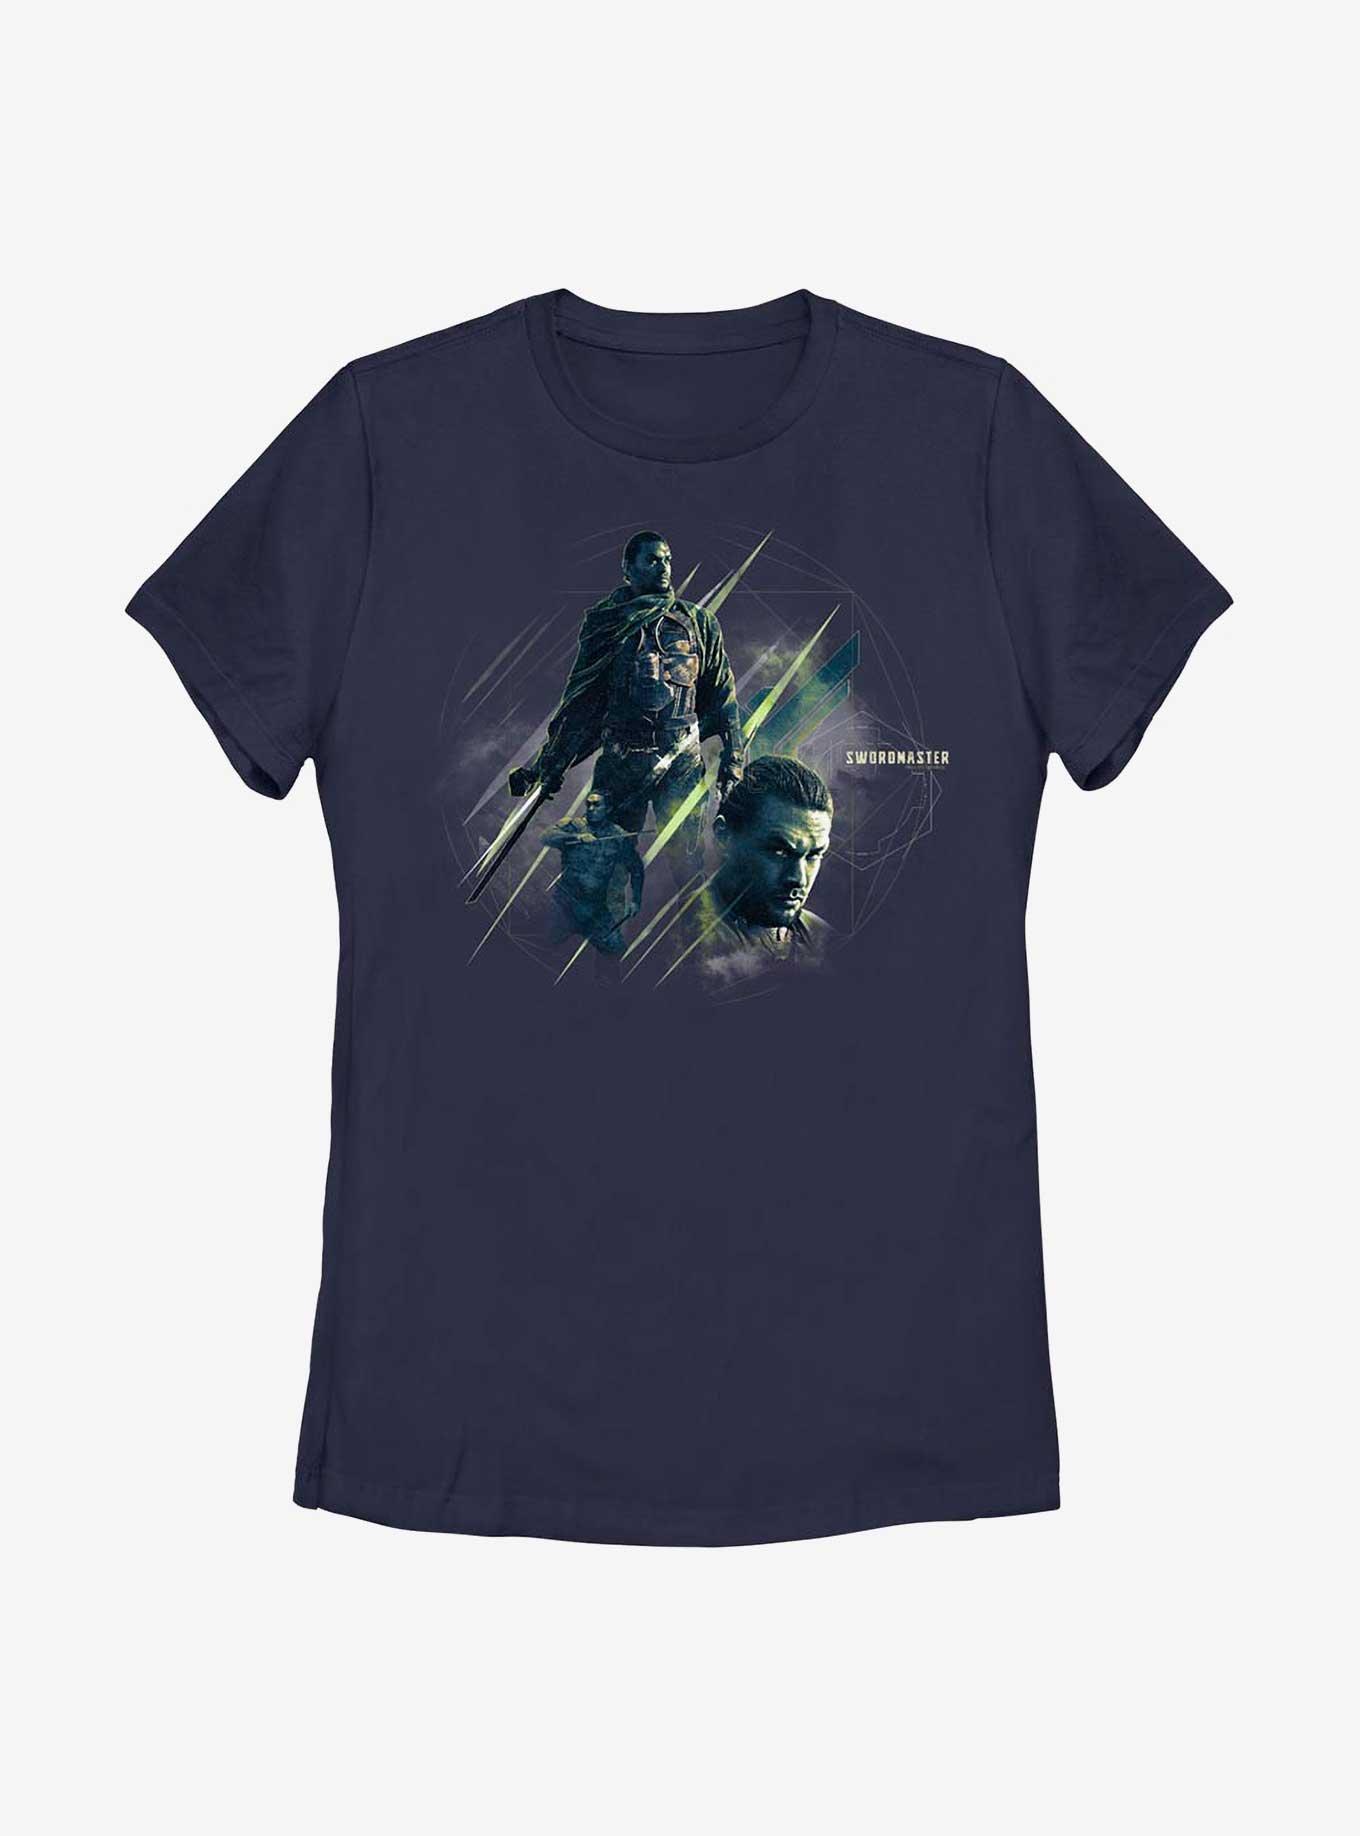 Dune Swordmaster Womens T-Shirt, , hi-res